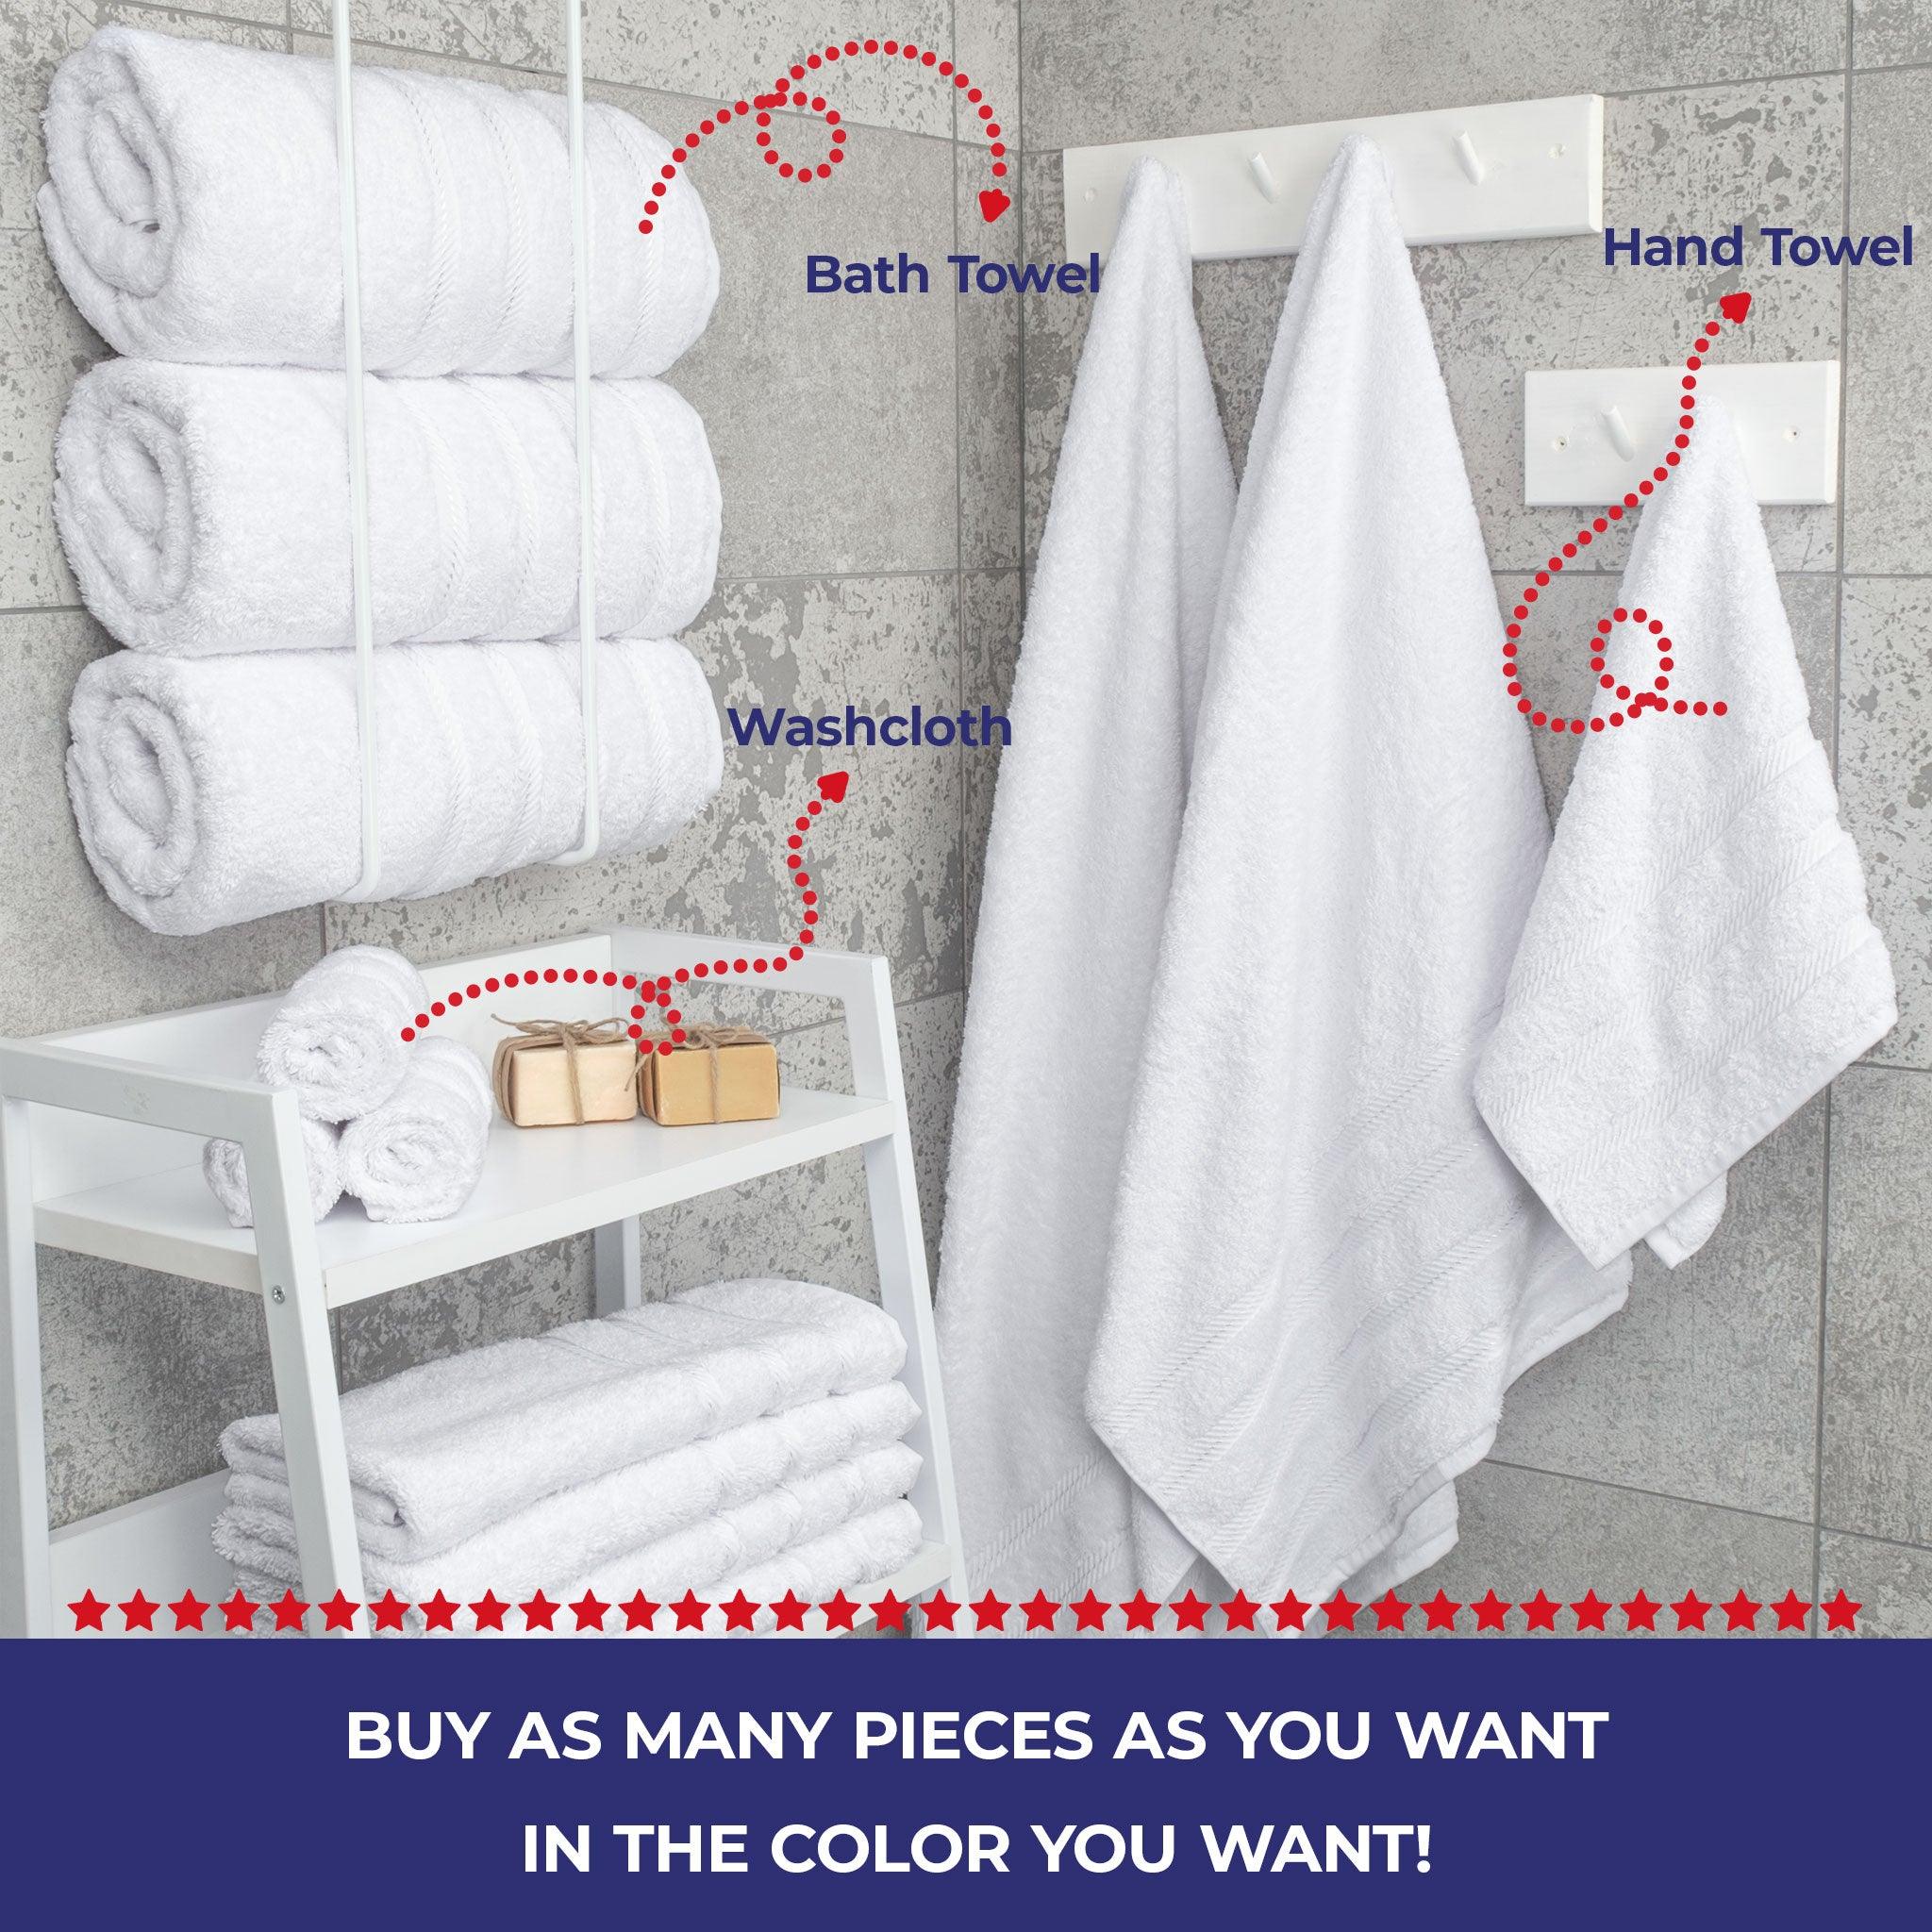 American Soft Linen - Single Piece Turkish Cotton Bath Towels - White - 4